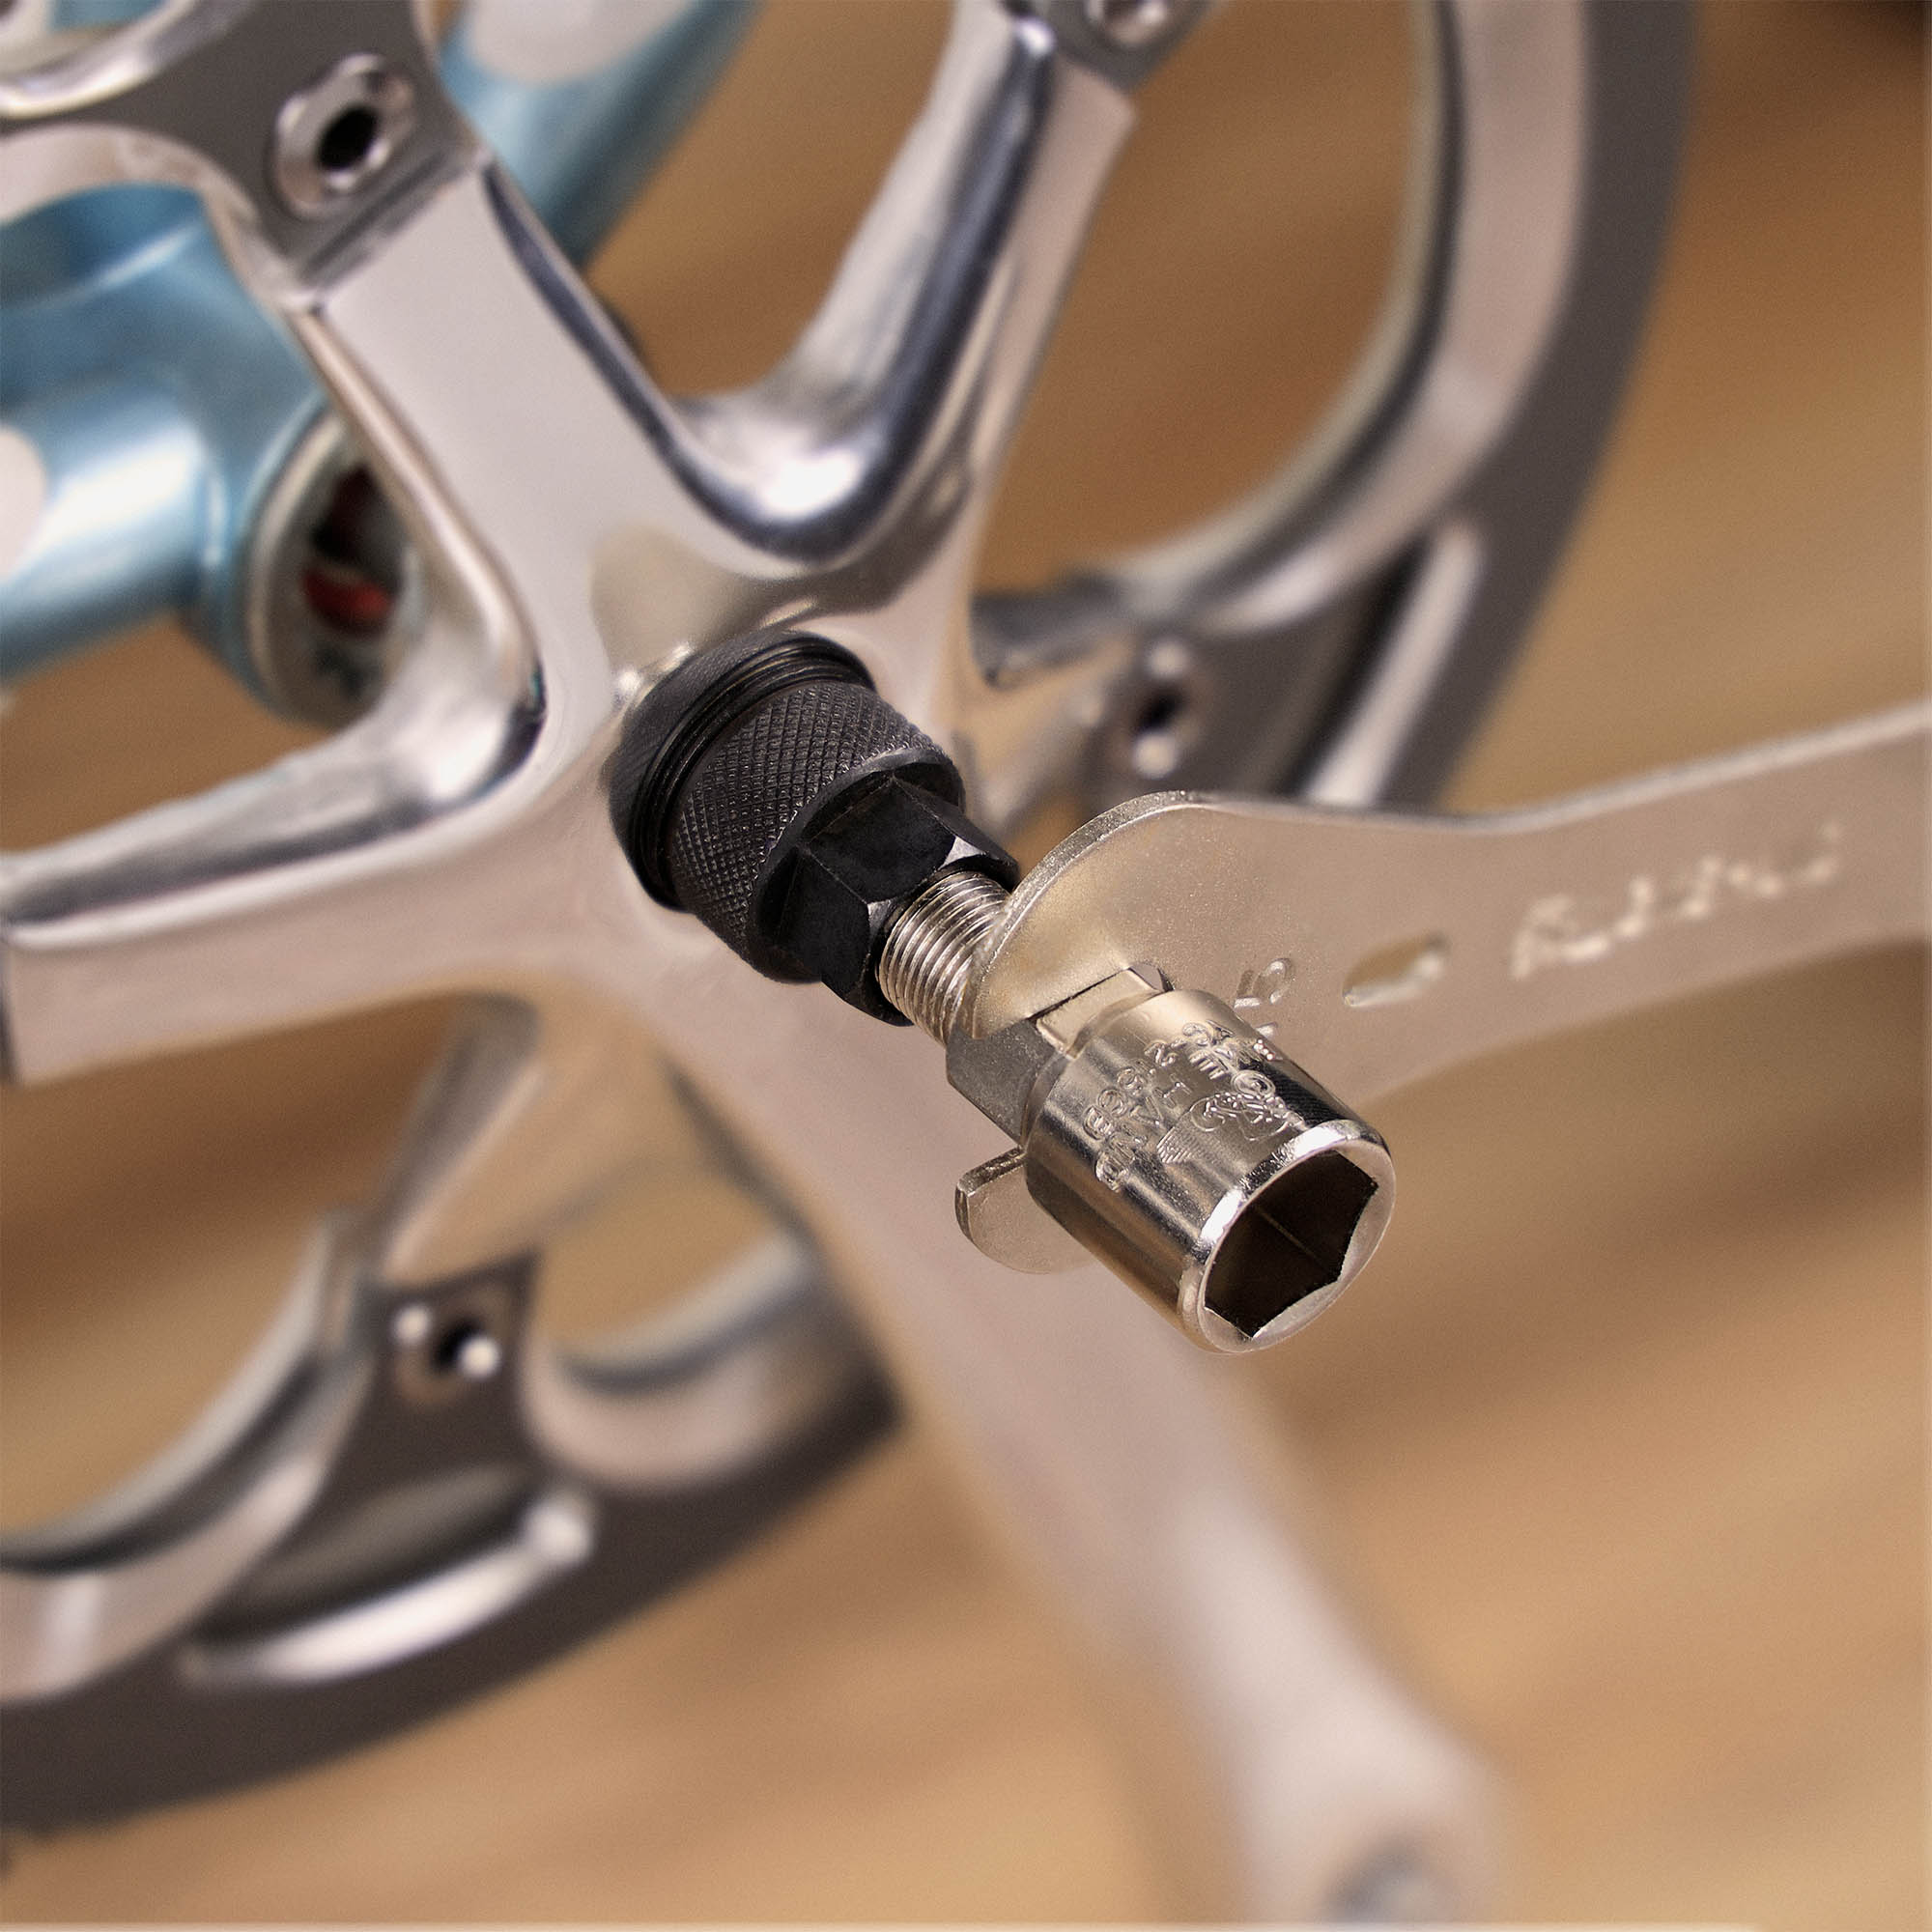 BIKEHAND Bicycle Bike Quality Crankset Crank Arm Puller